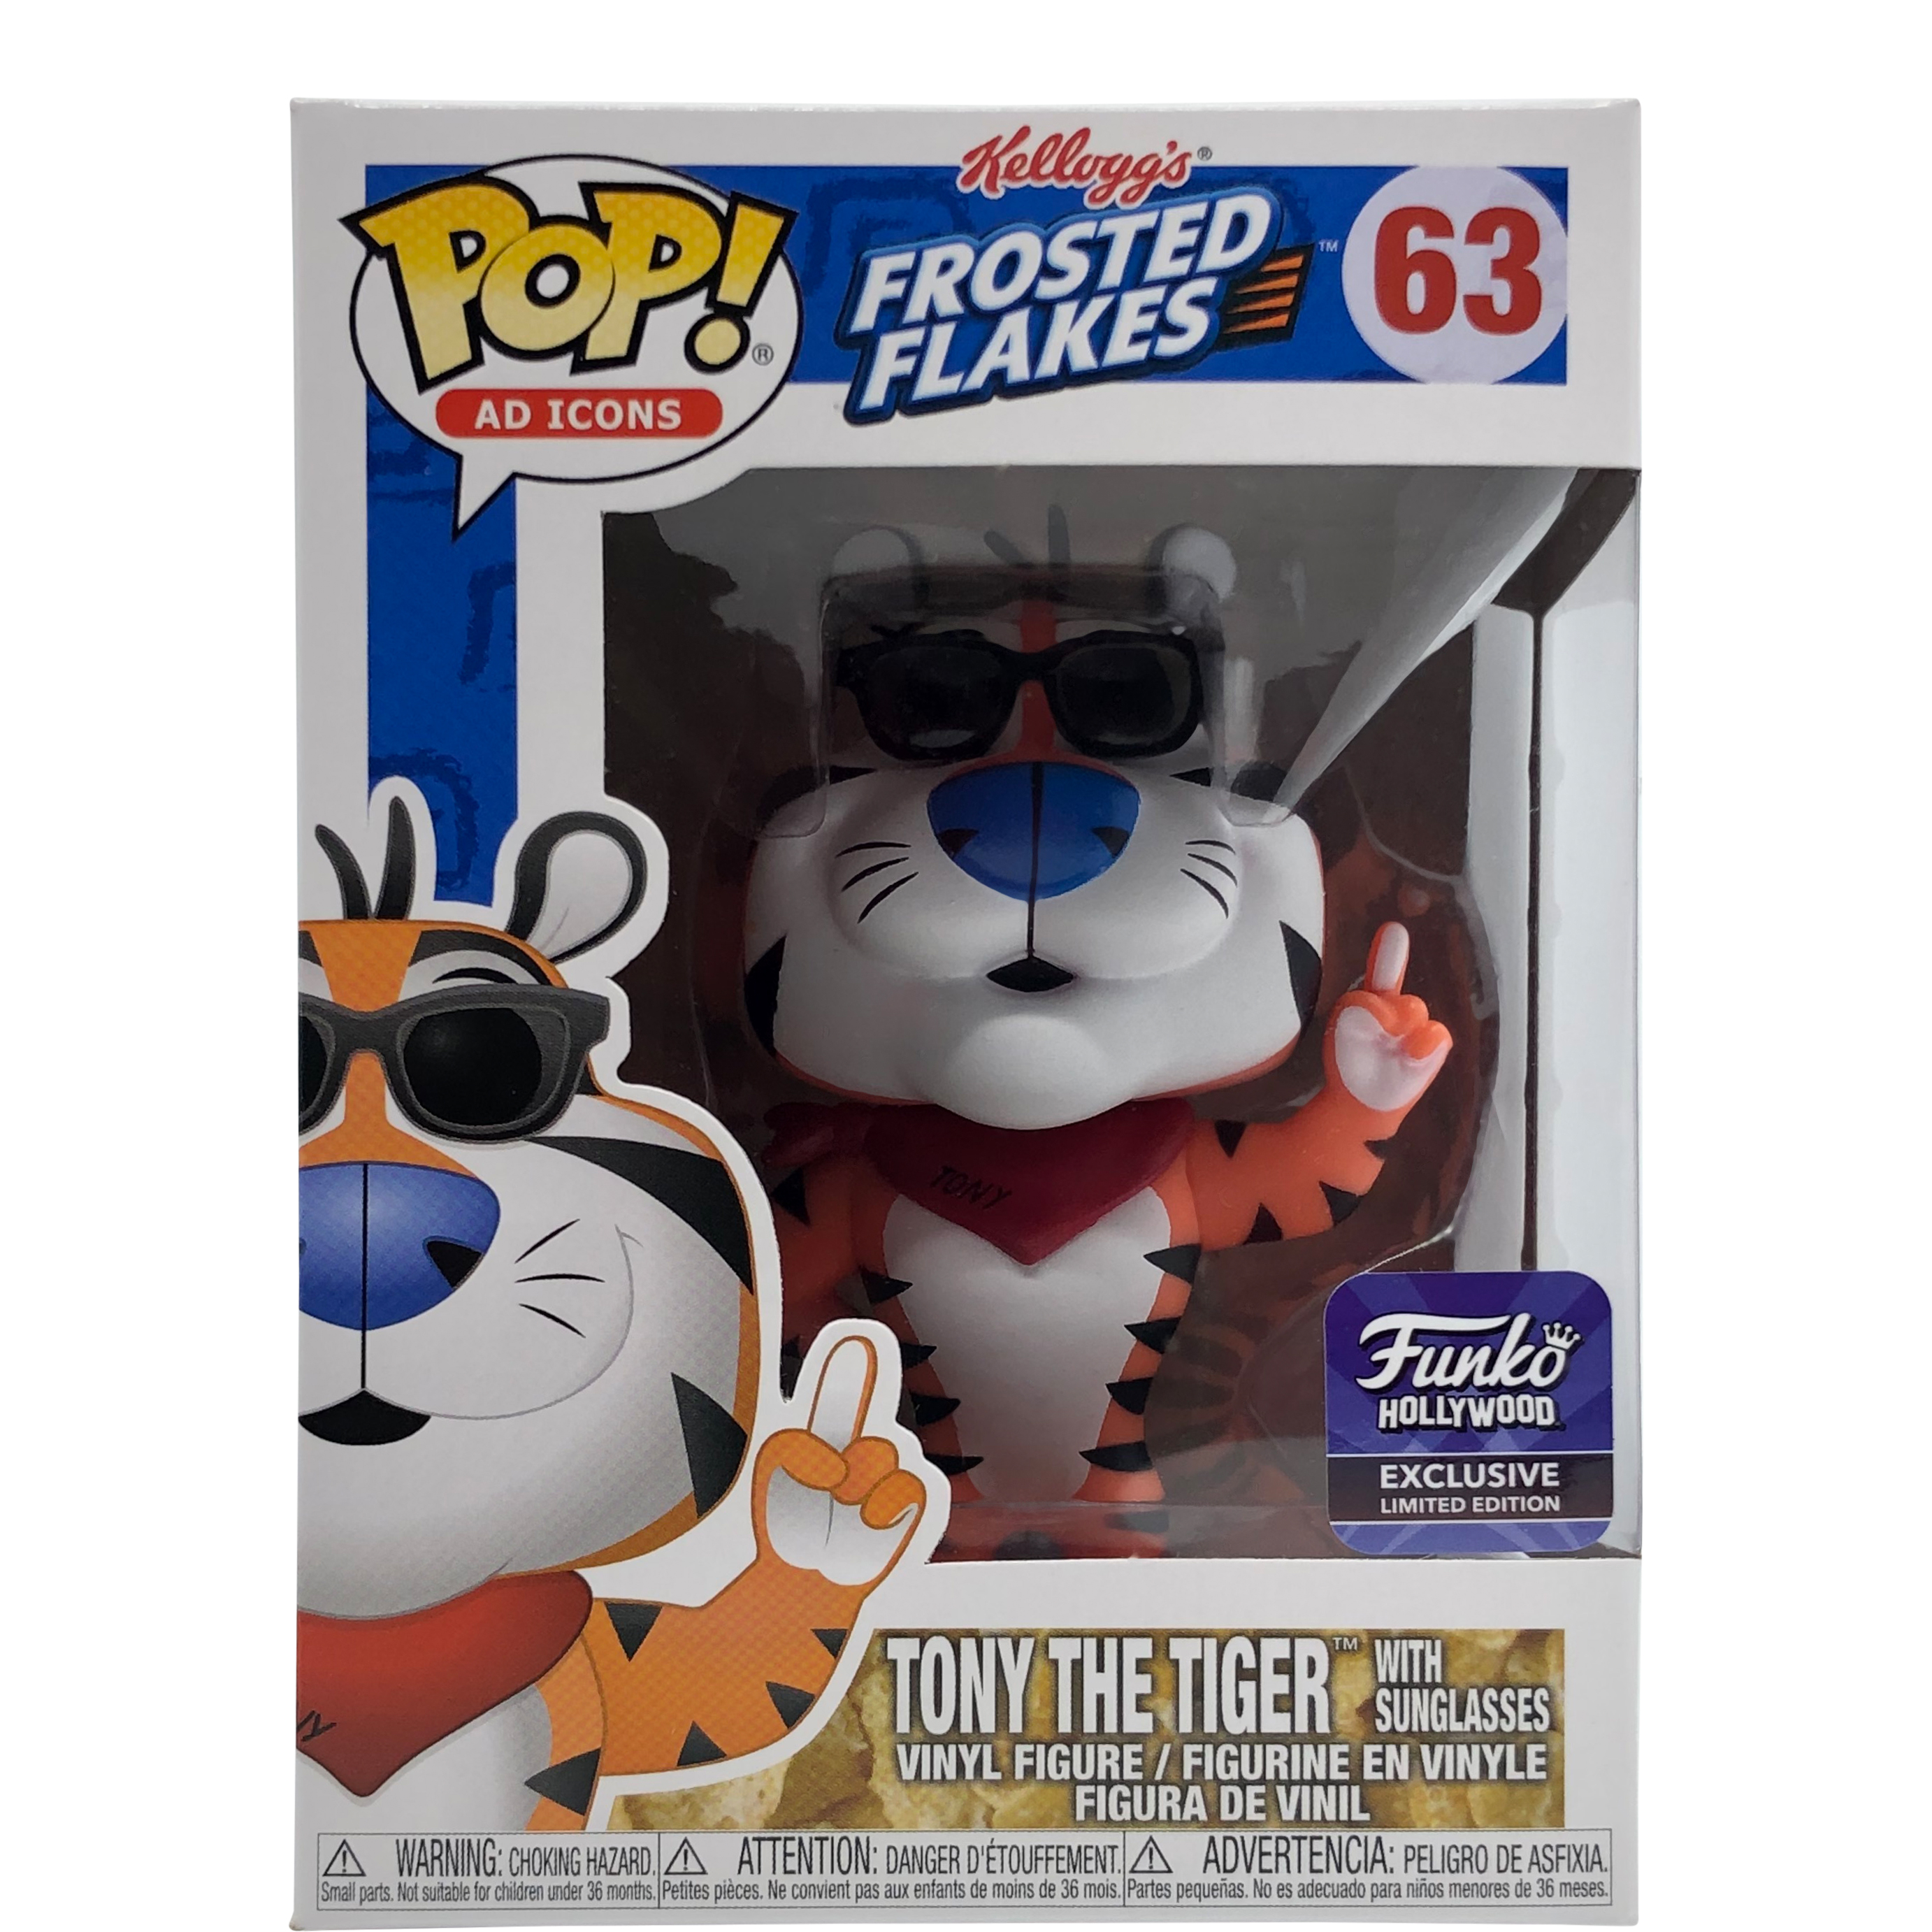 Ad Icons Toy New Tony The Tiger Keychain: Funko Pop 